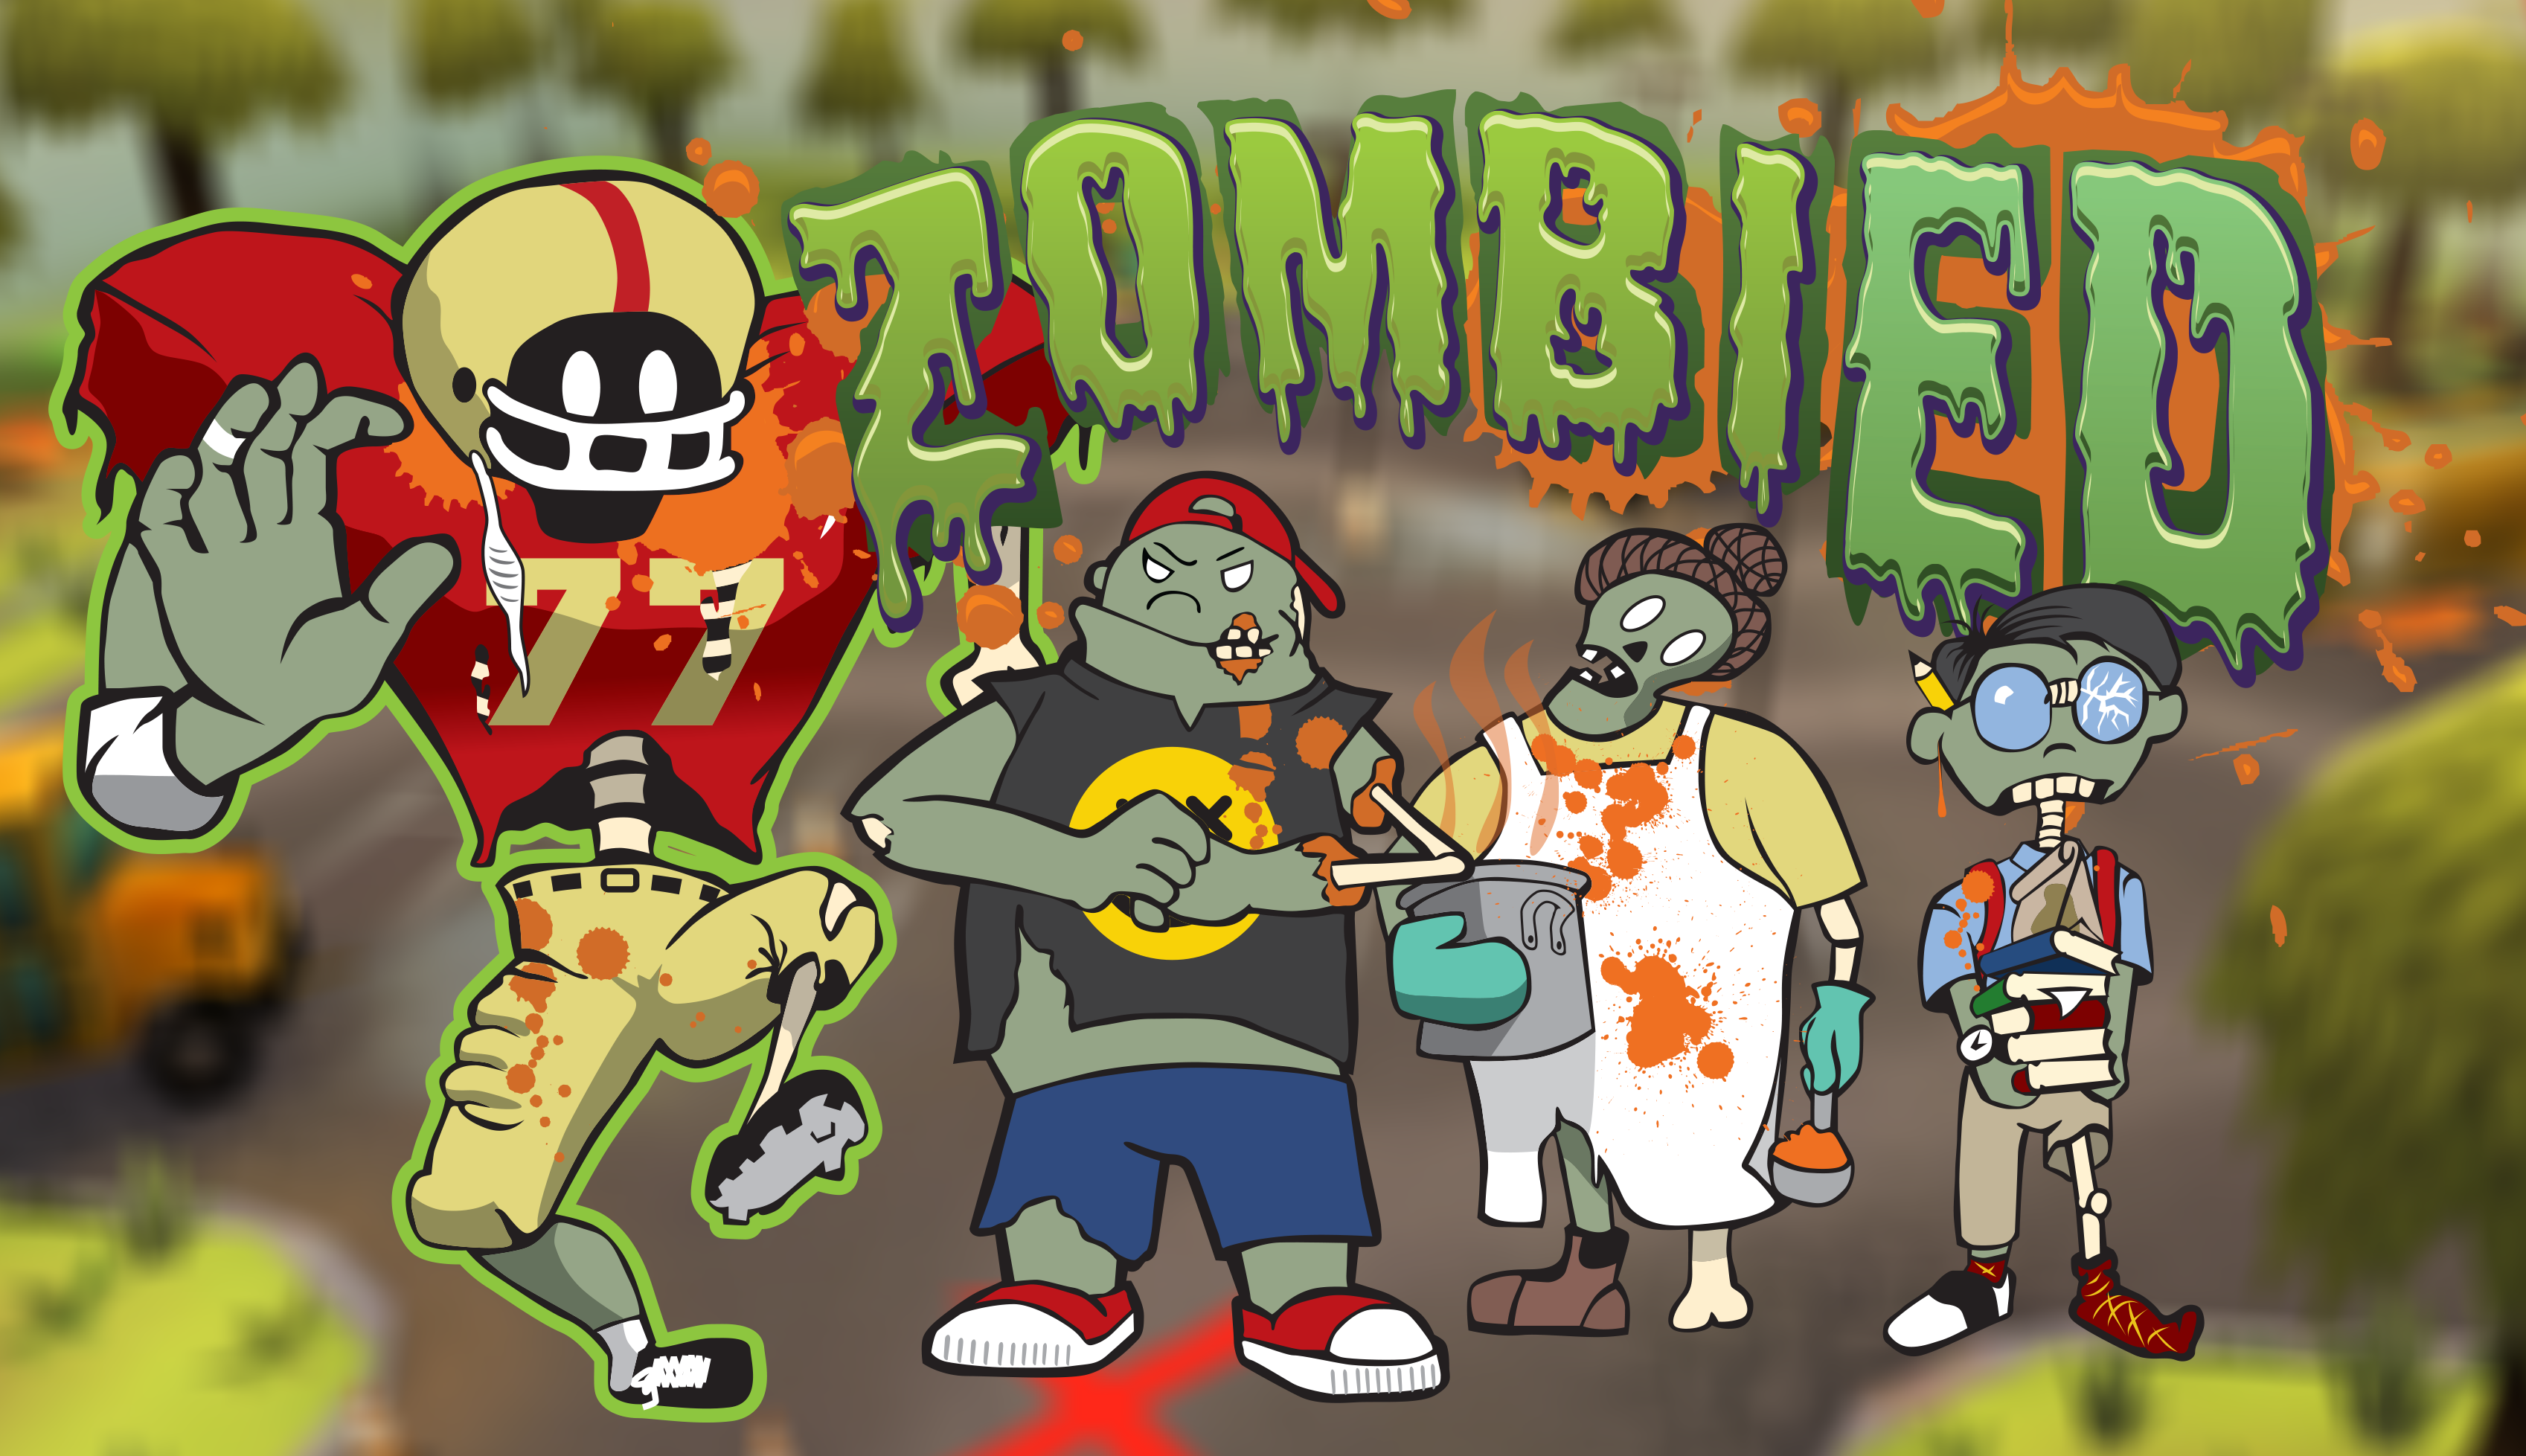 Zombies 1. Add media. 